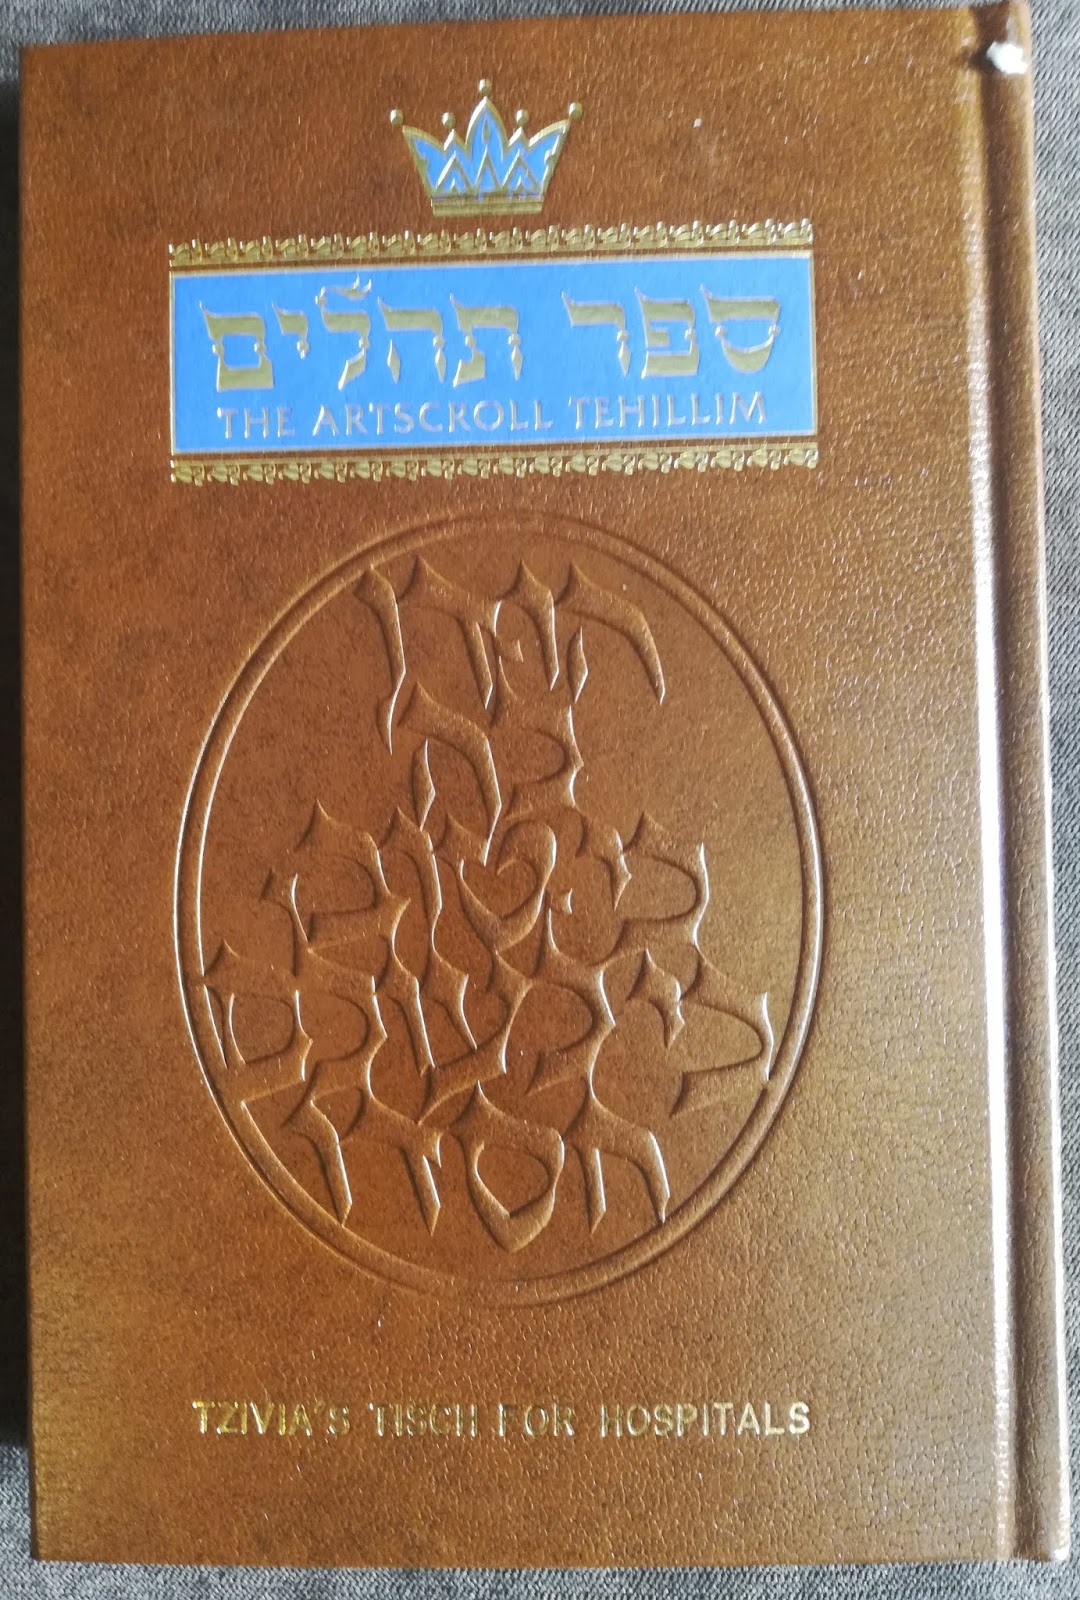 Donate Jewish prayer books to hospitals that need them ...